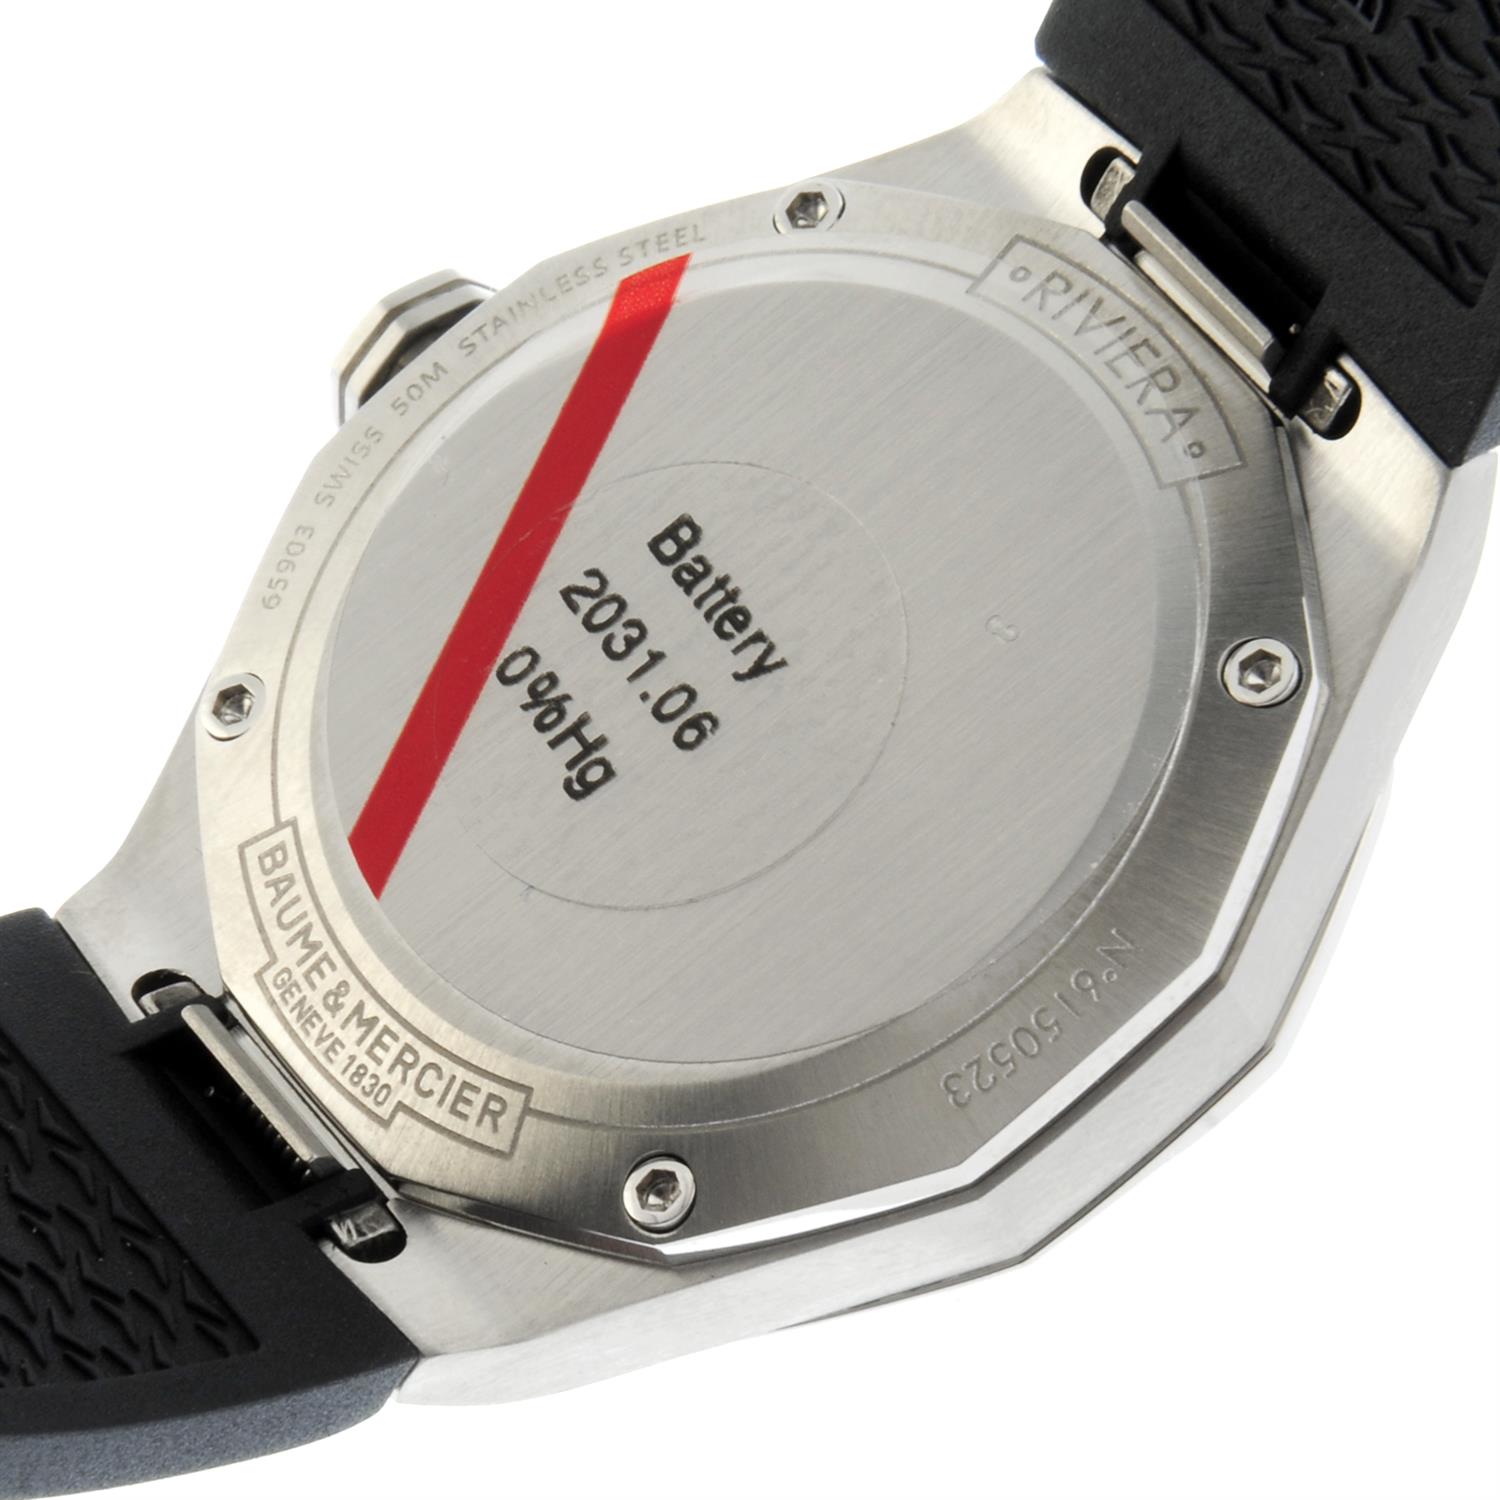 Baume & Mercier - a Riviera watch, 37mm. - Image 4 of 6